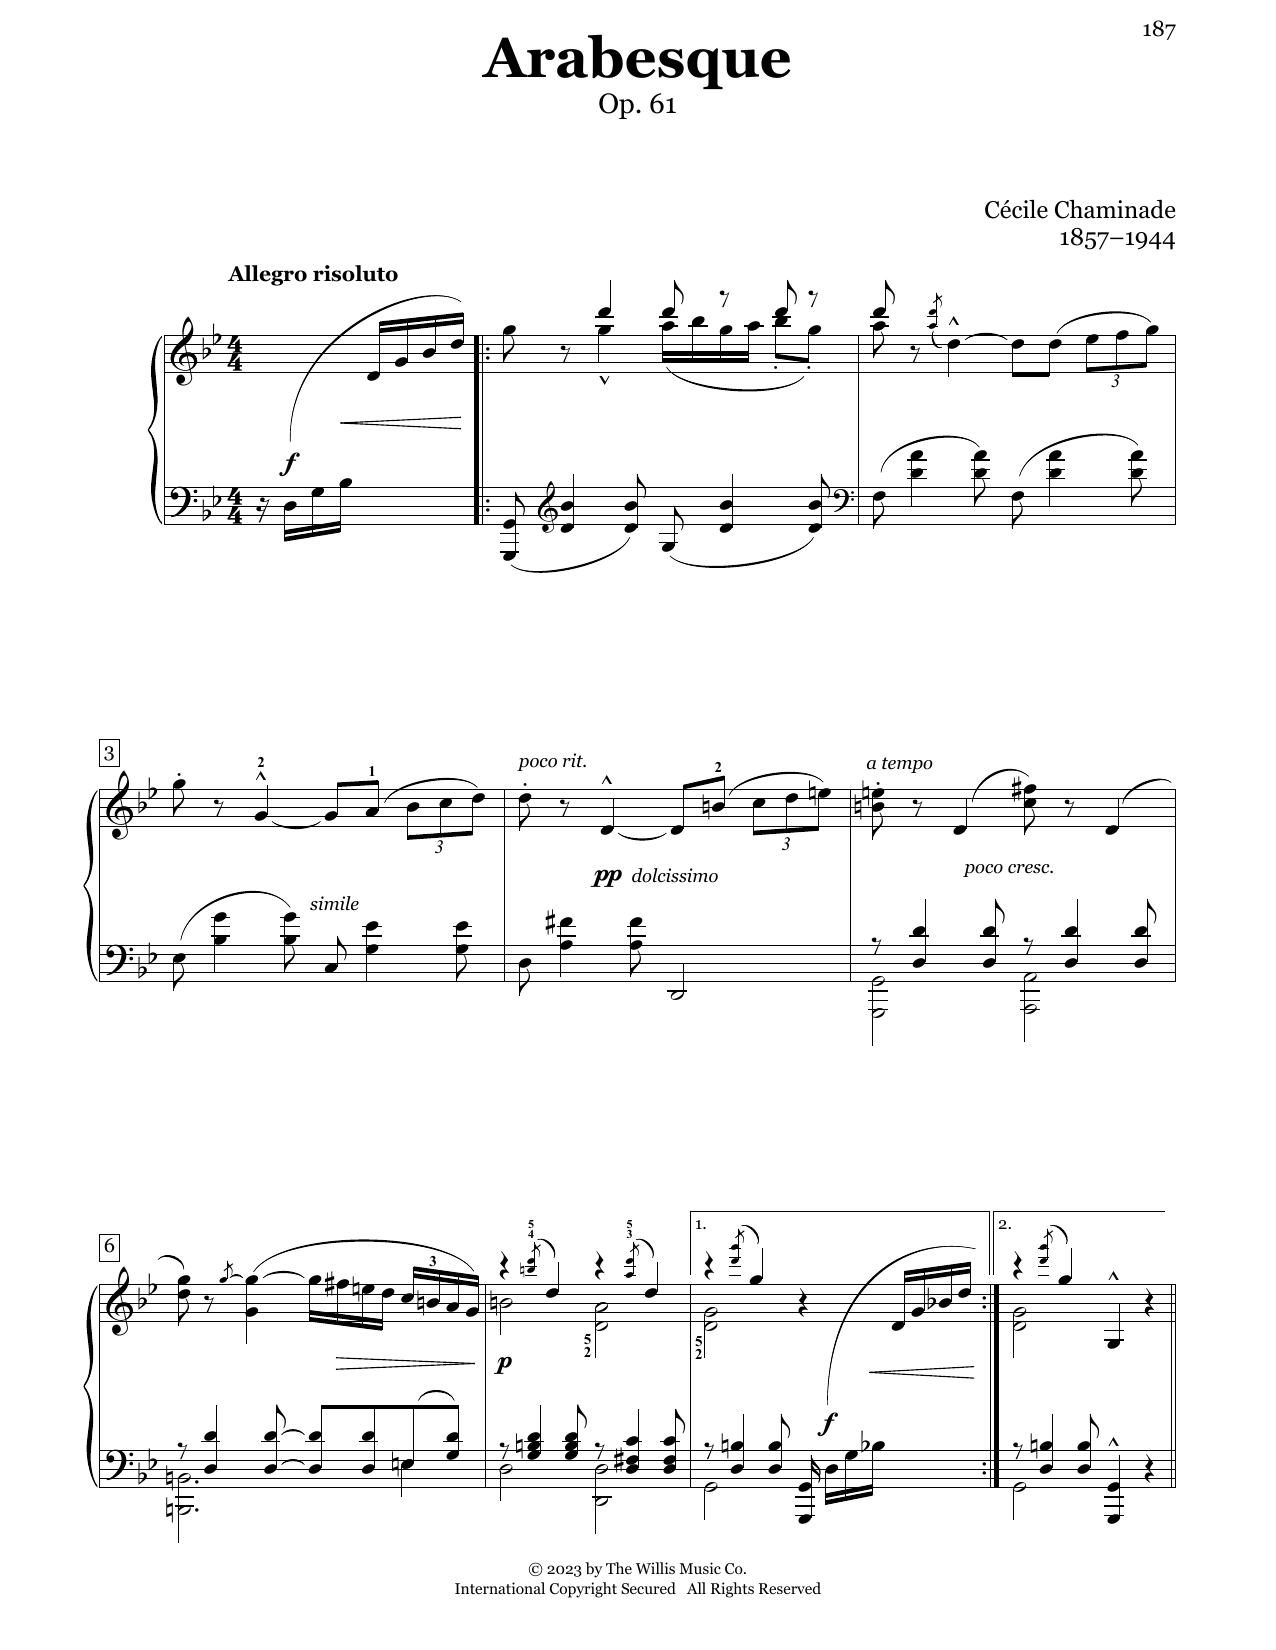 Cecile Chaminade Arabesque, Op. 61 sheet music notes printable PDF score